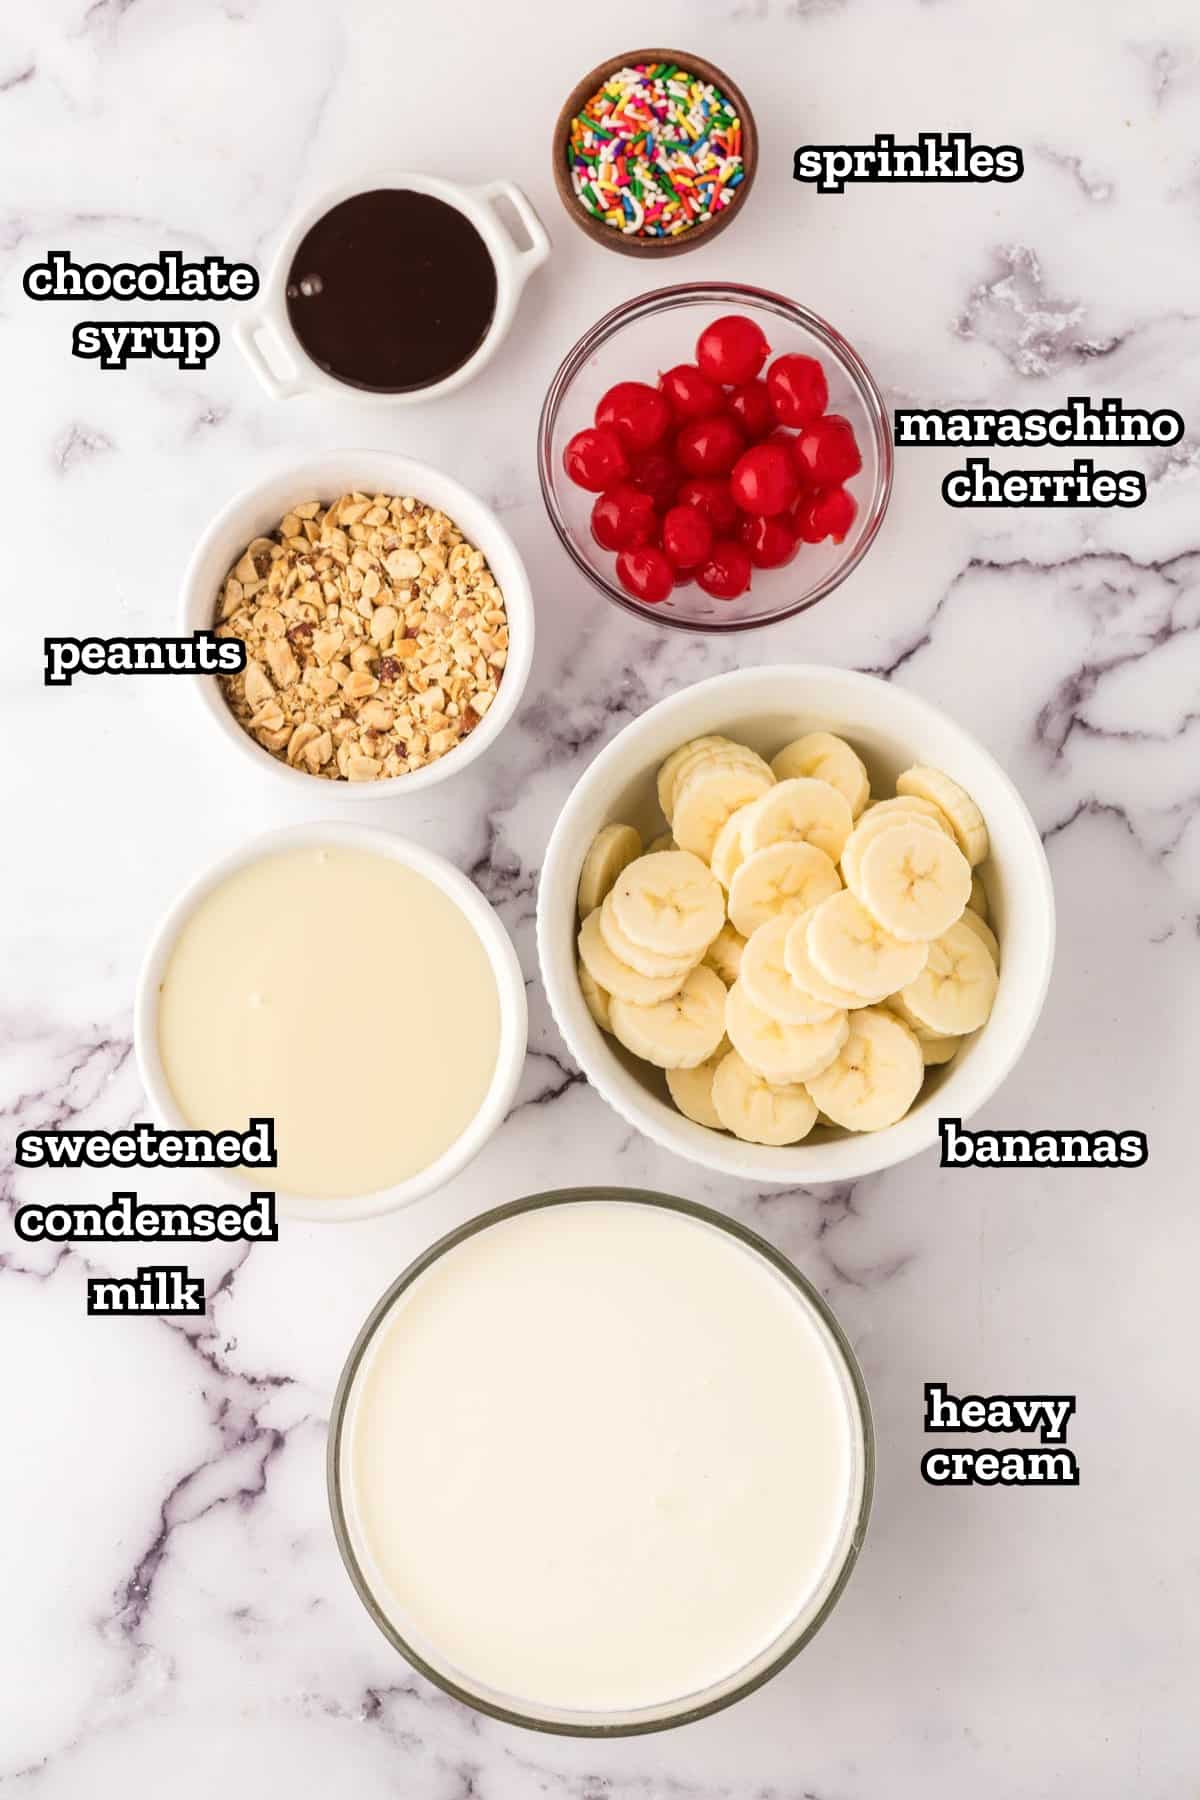 Labeled ingredients needed to make banana split ice cream.